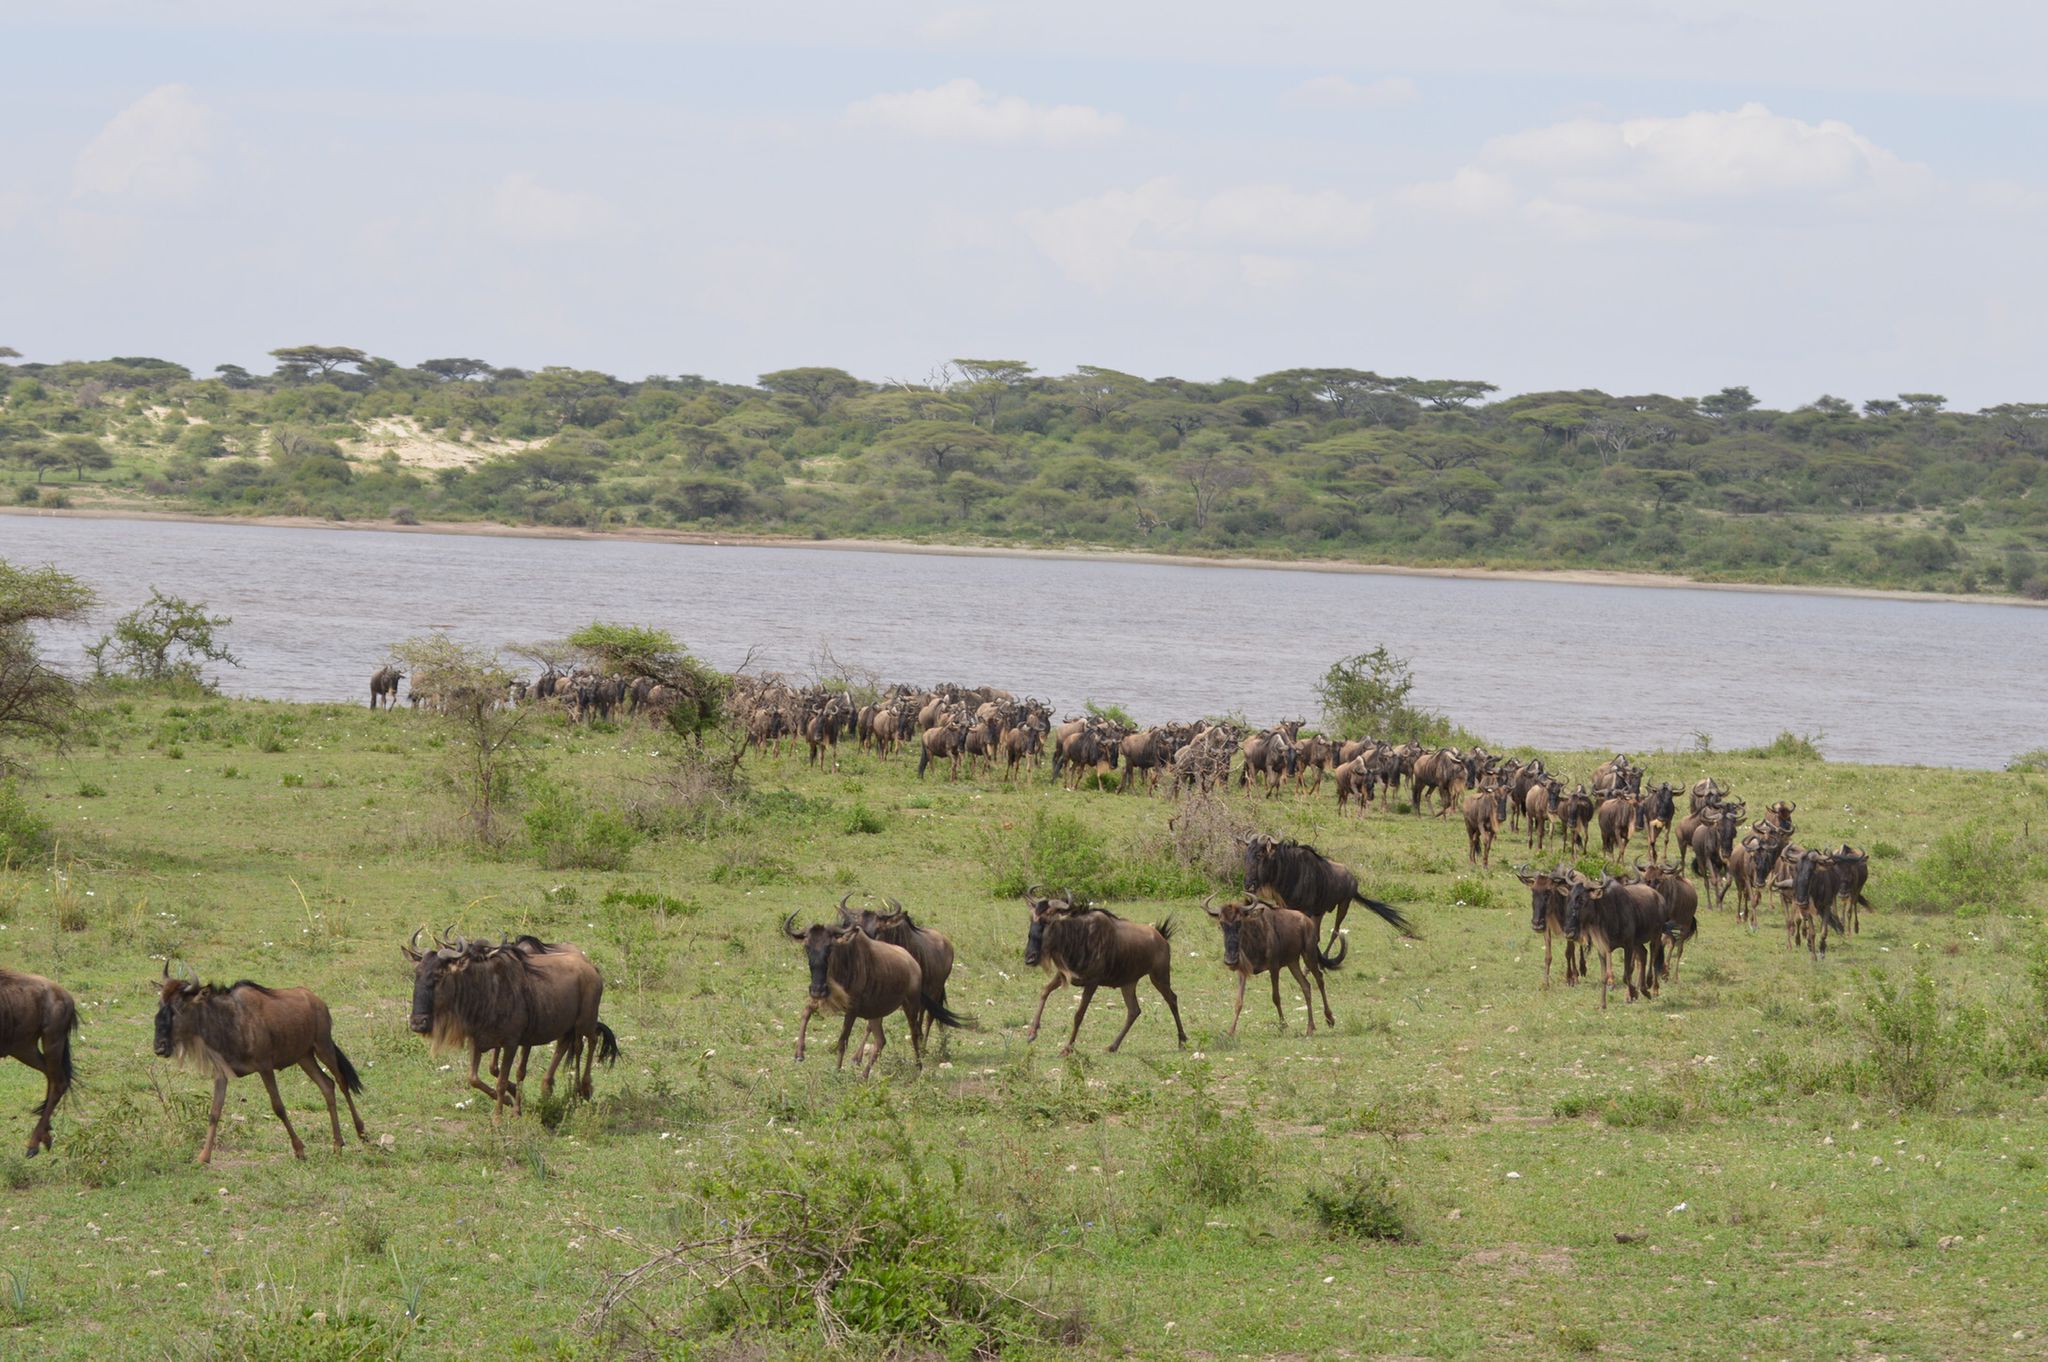 Wildebeest in migration